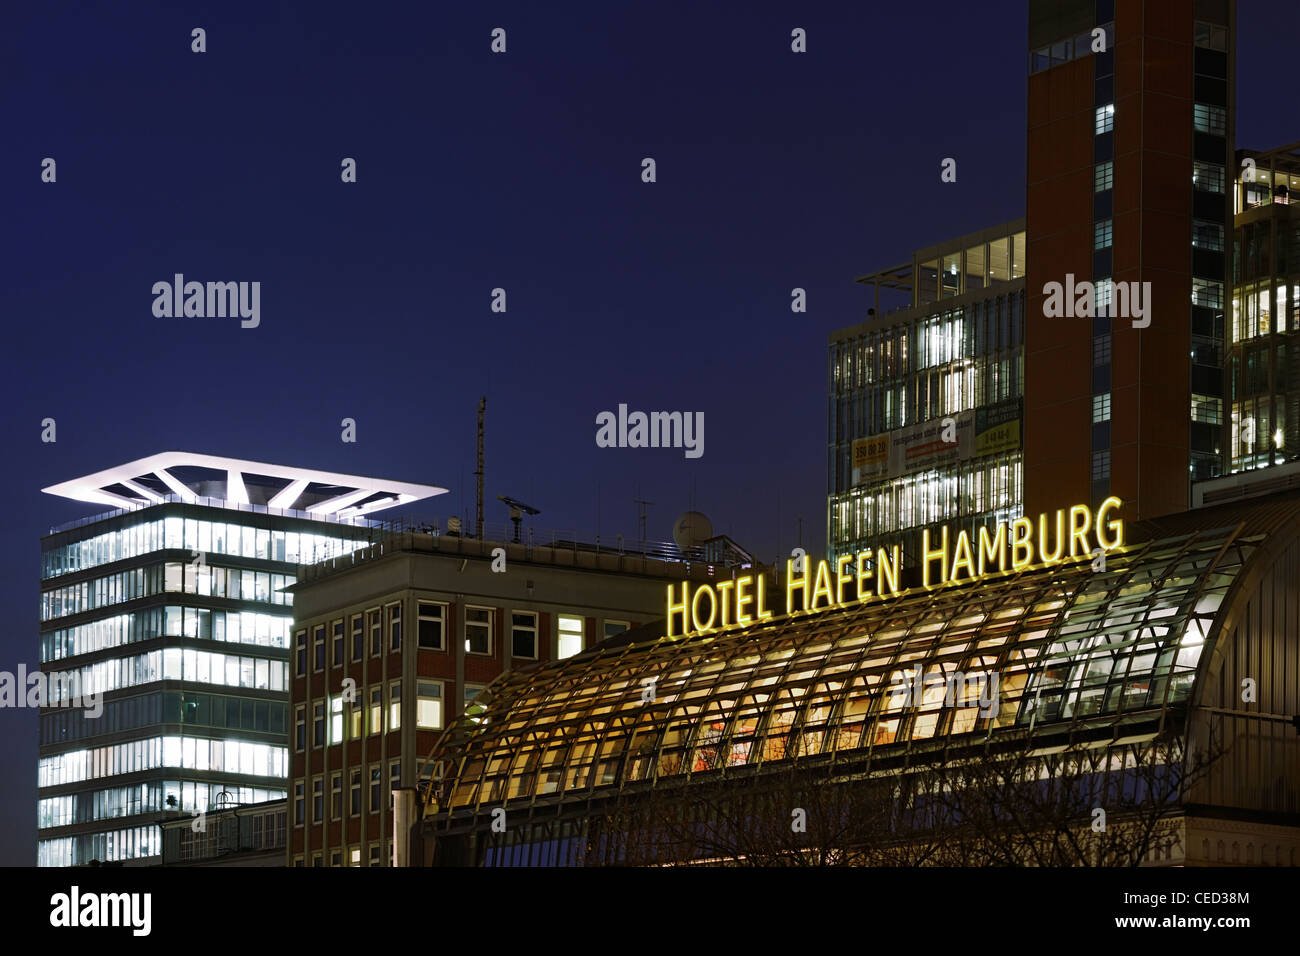 Hotel Hafen Hamburg e Astra brewery locali, torre di uffici, St. Pauli, Hamburg, Amburgo, Germania, Europa Foto Stock